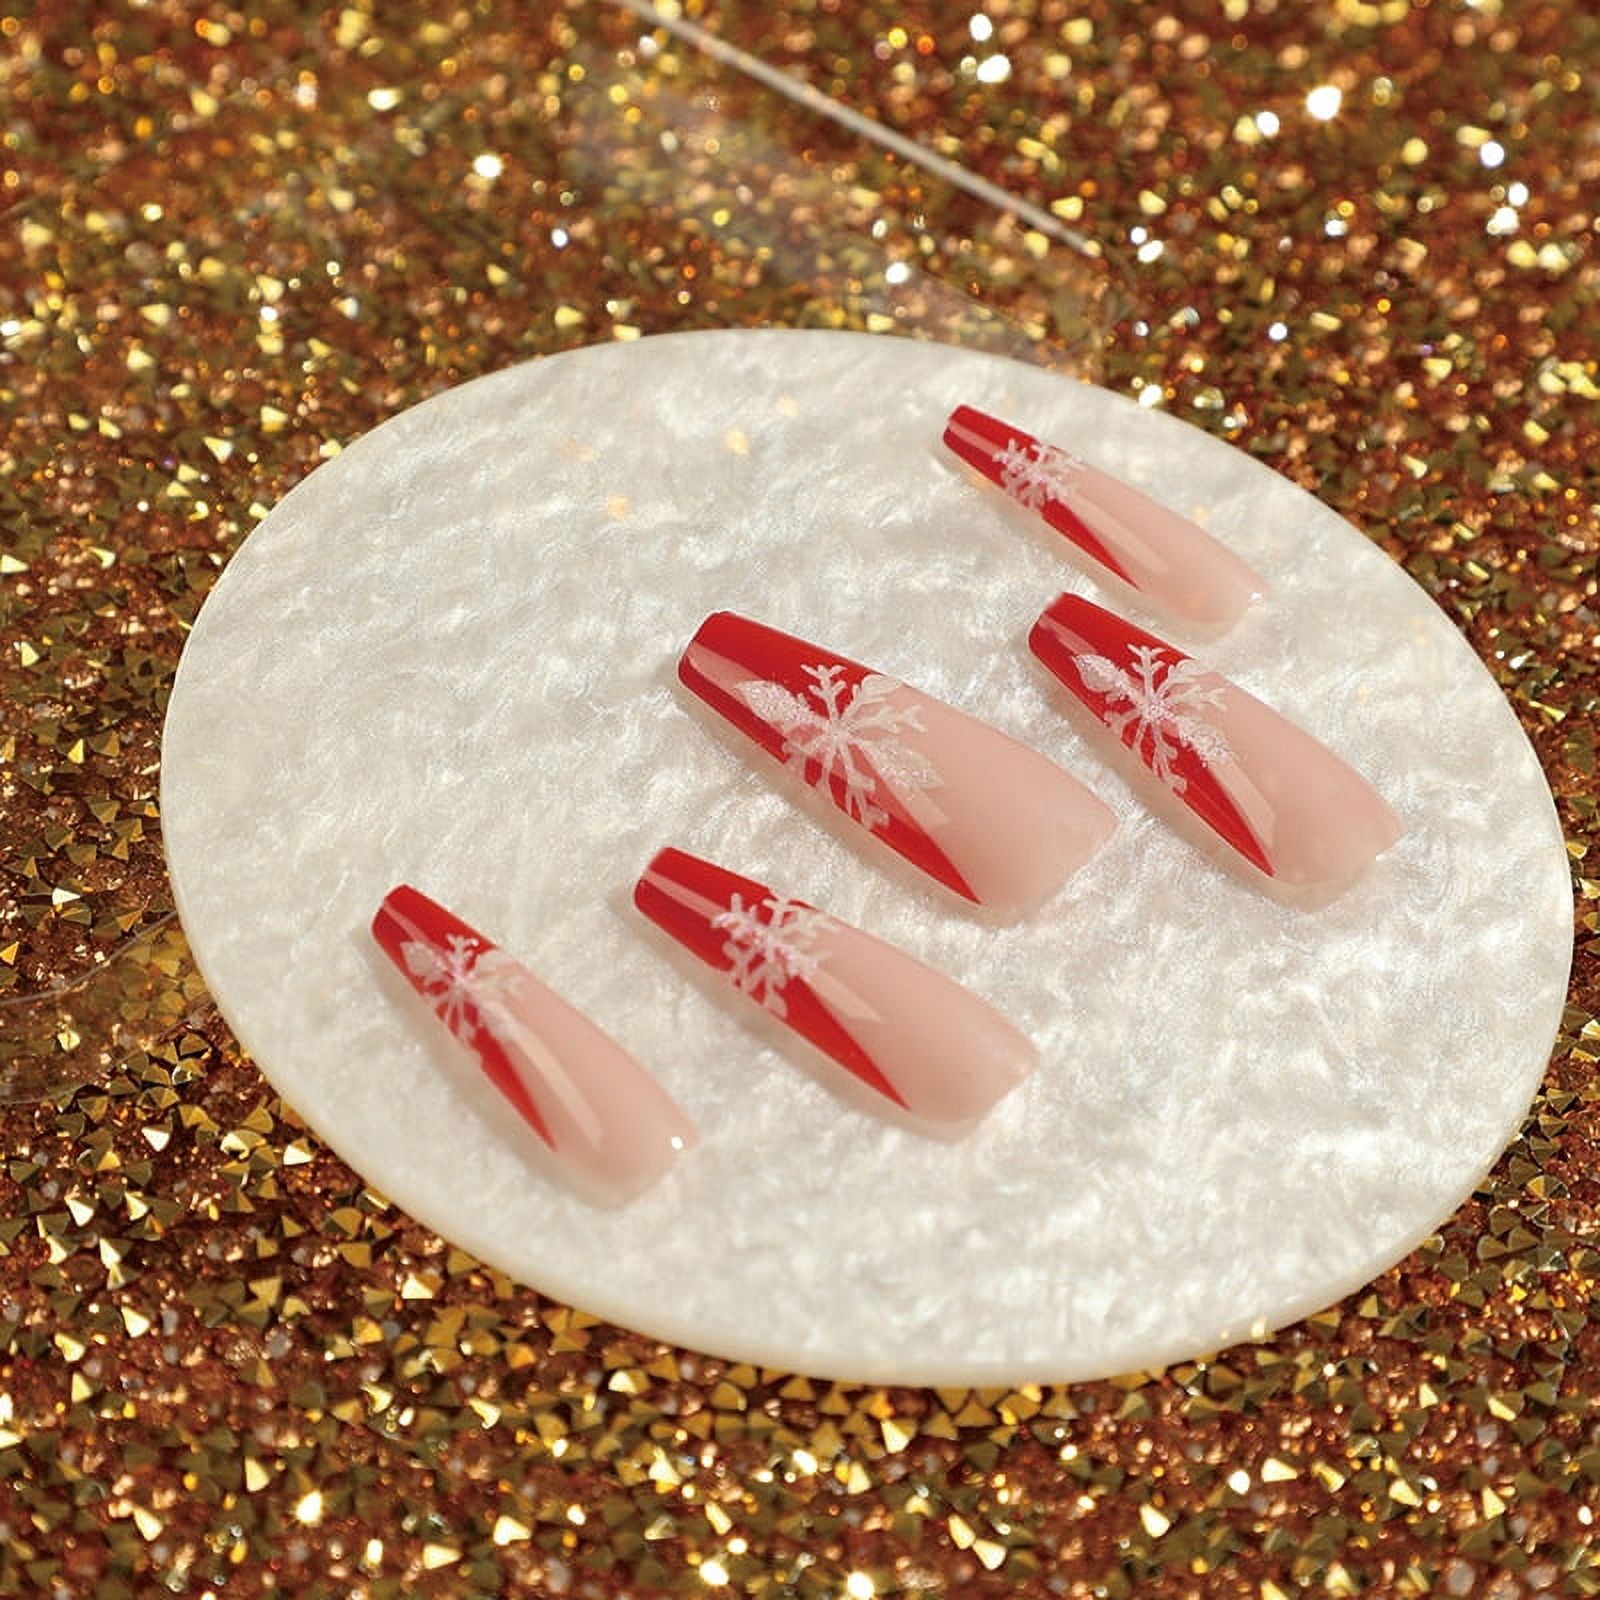 30 Glitter Nails To Bright Up The Season : Swirl Glitter Coffin Long Nails